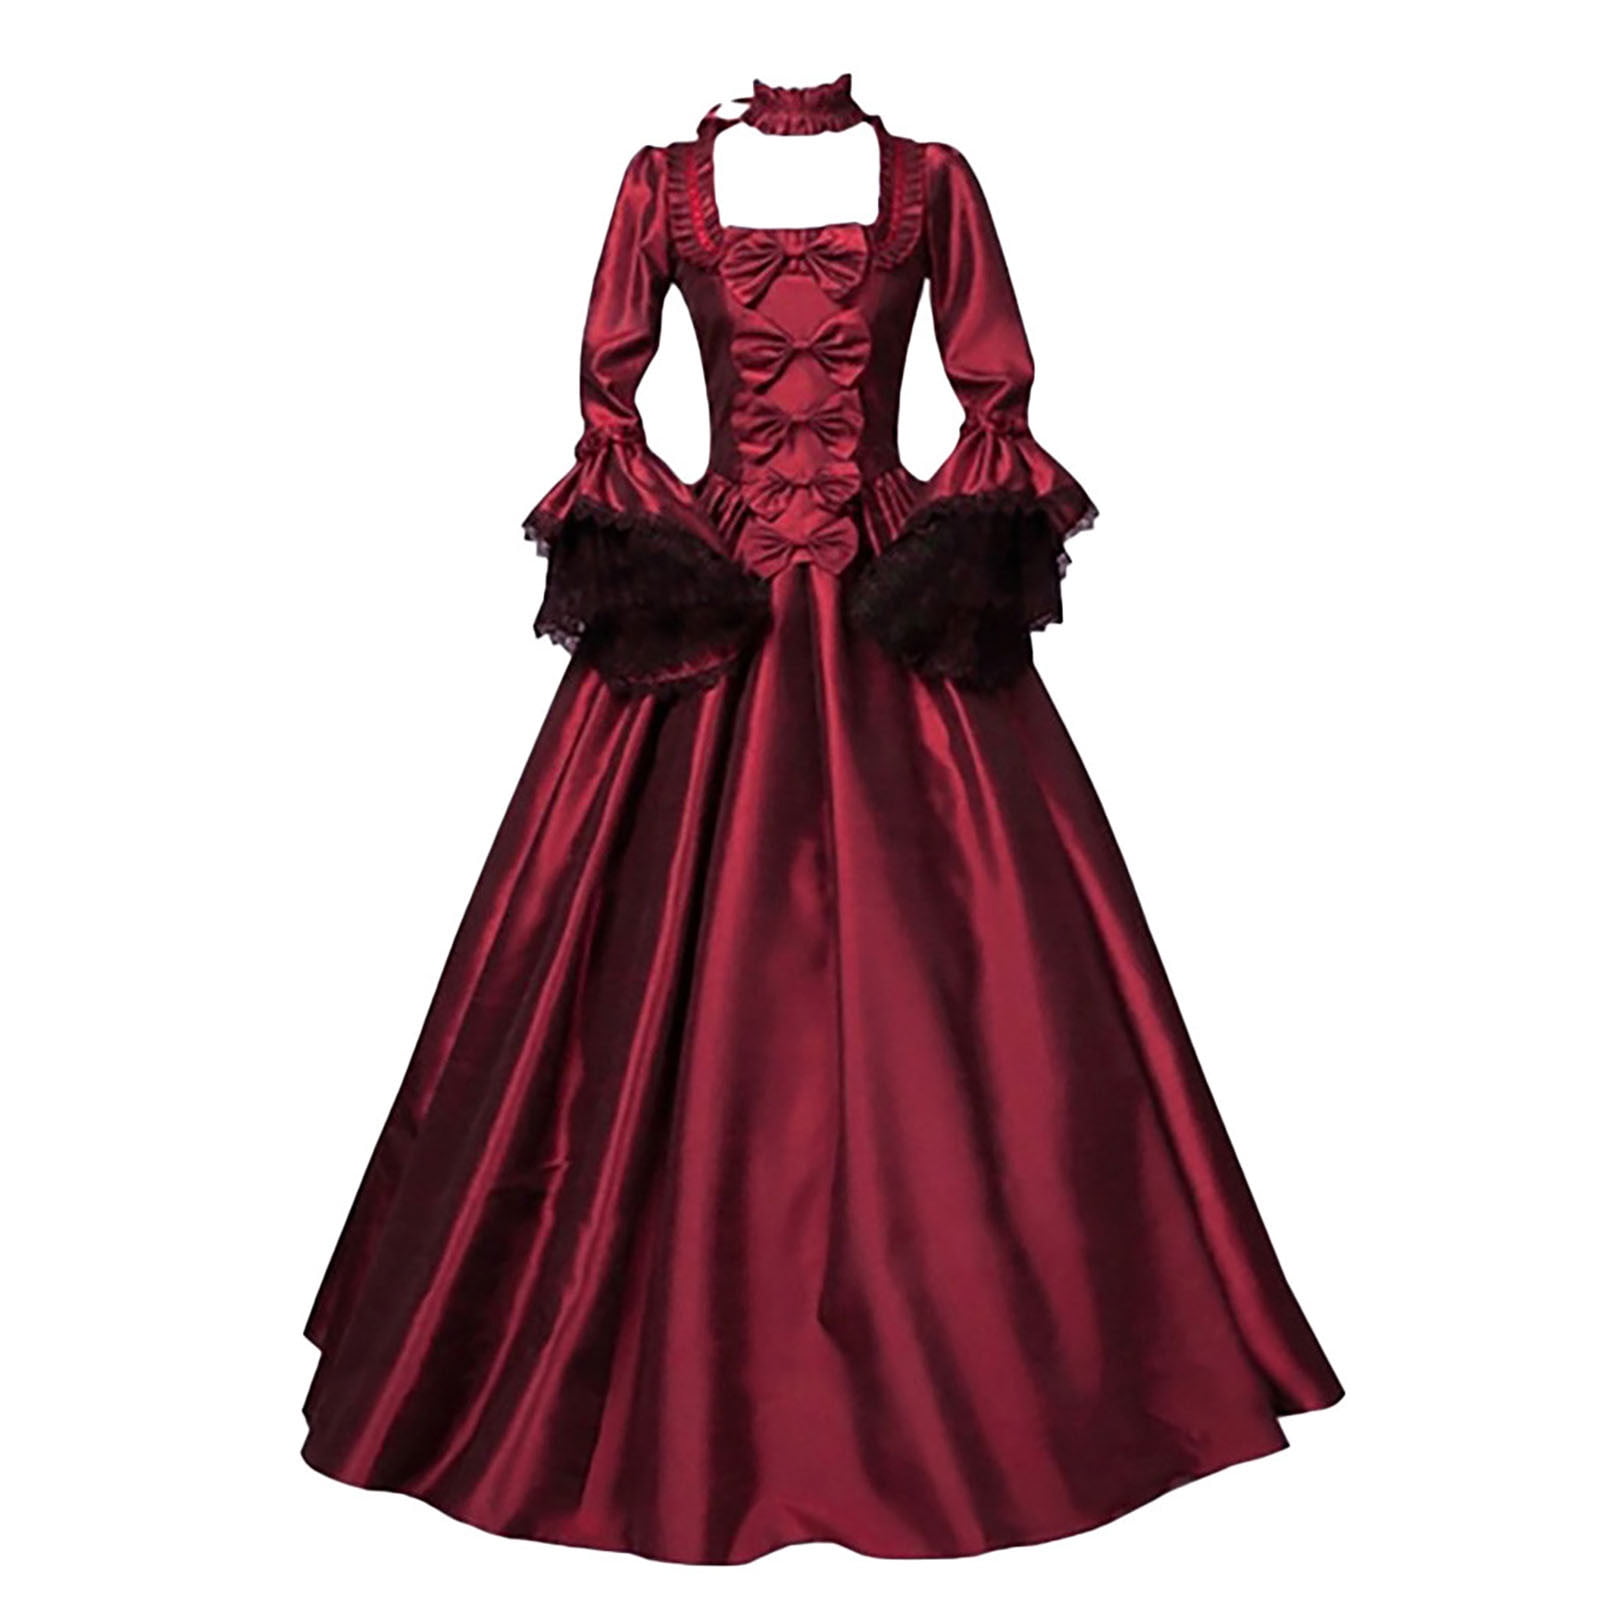 Medieval Womens Renaissance Dress Costume Ball Gown Retro Victorian Dress Corset